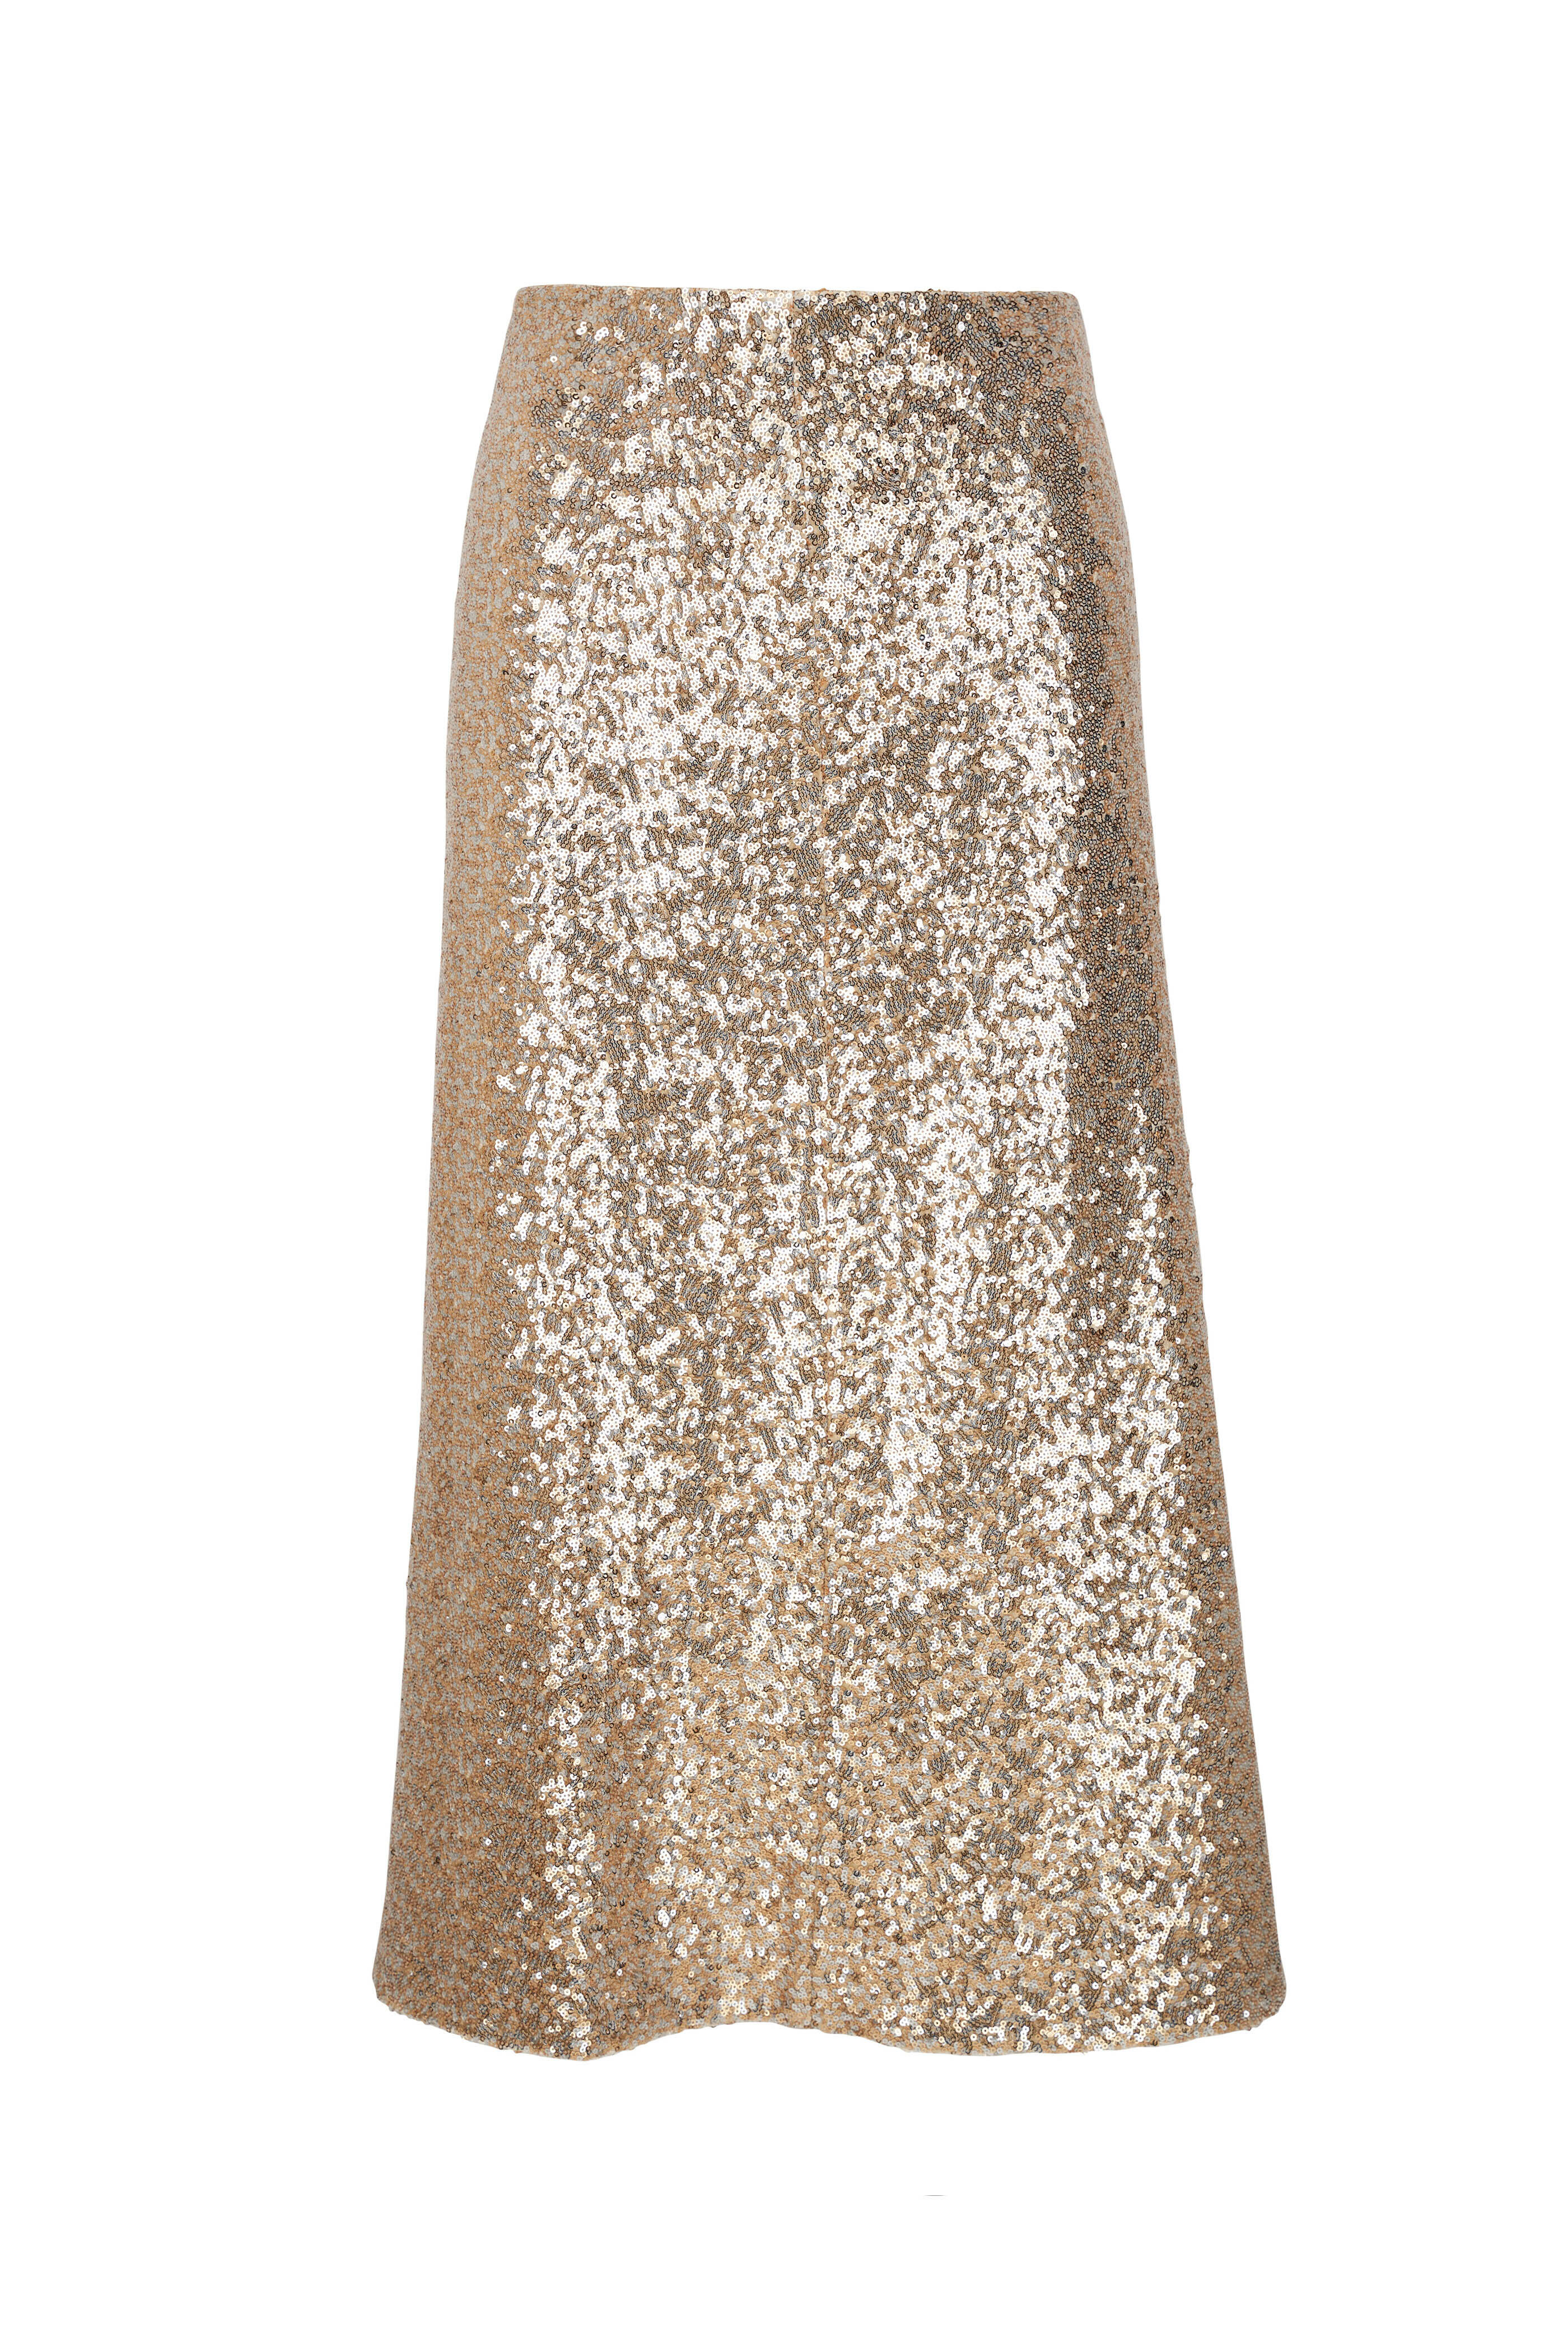 Dorothee Schumacher - Shimmering Comfort Gold Sequin Stretch Skirt